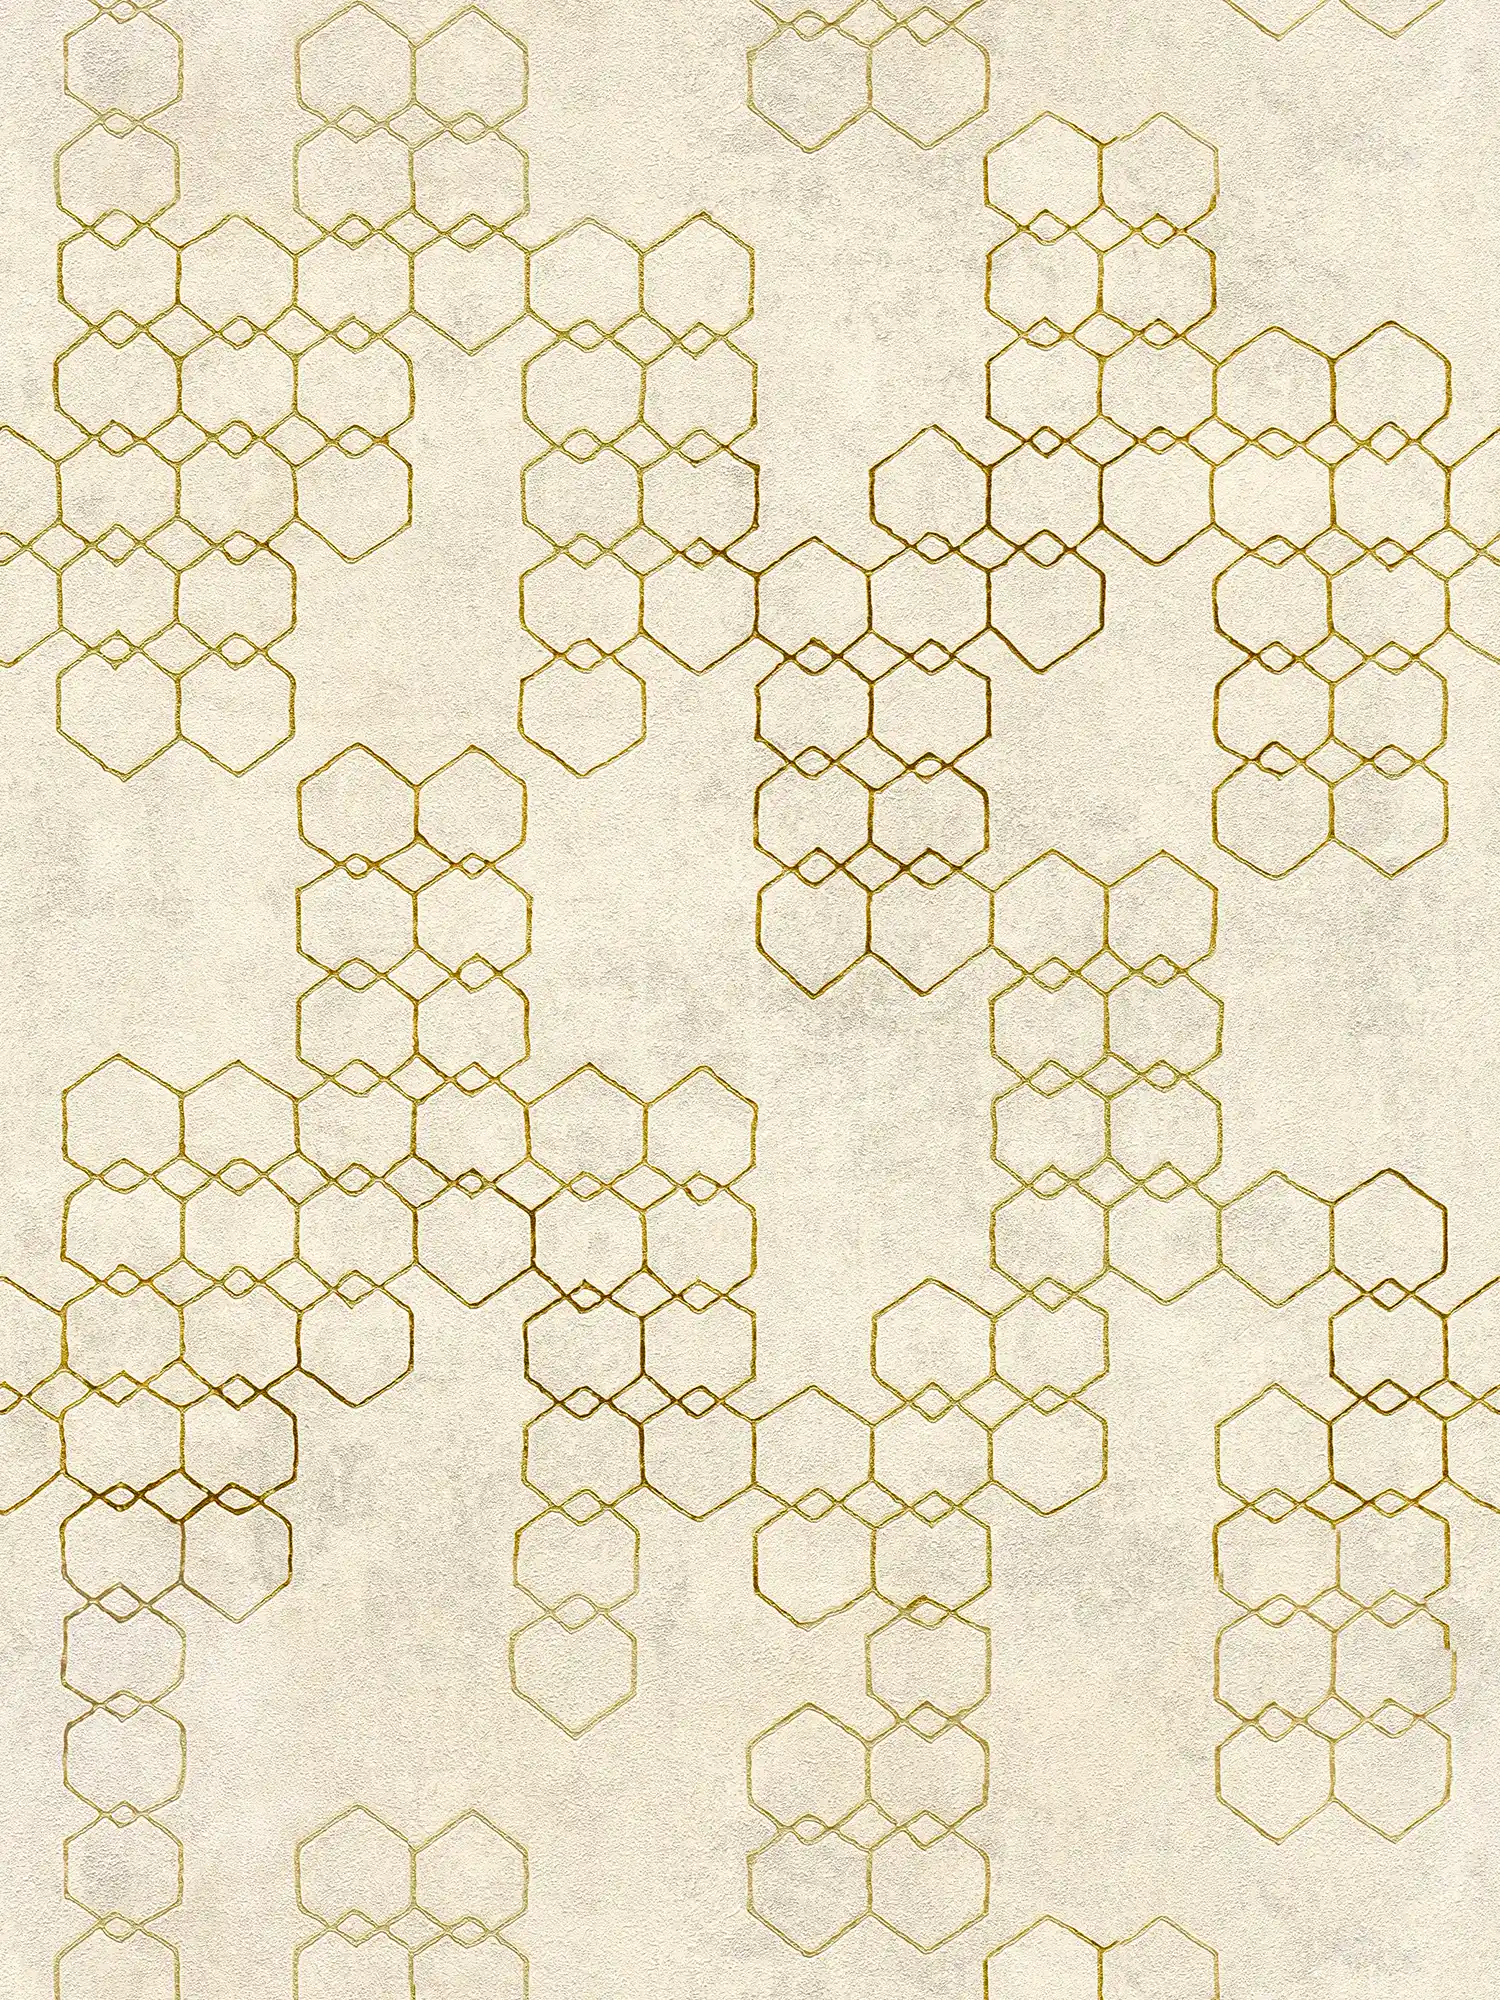         Geometrische Mustertapete im Industrial Style – Creme, Gold, Grau
    